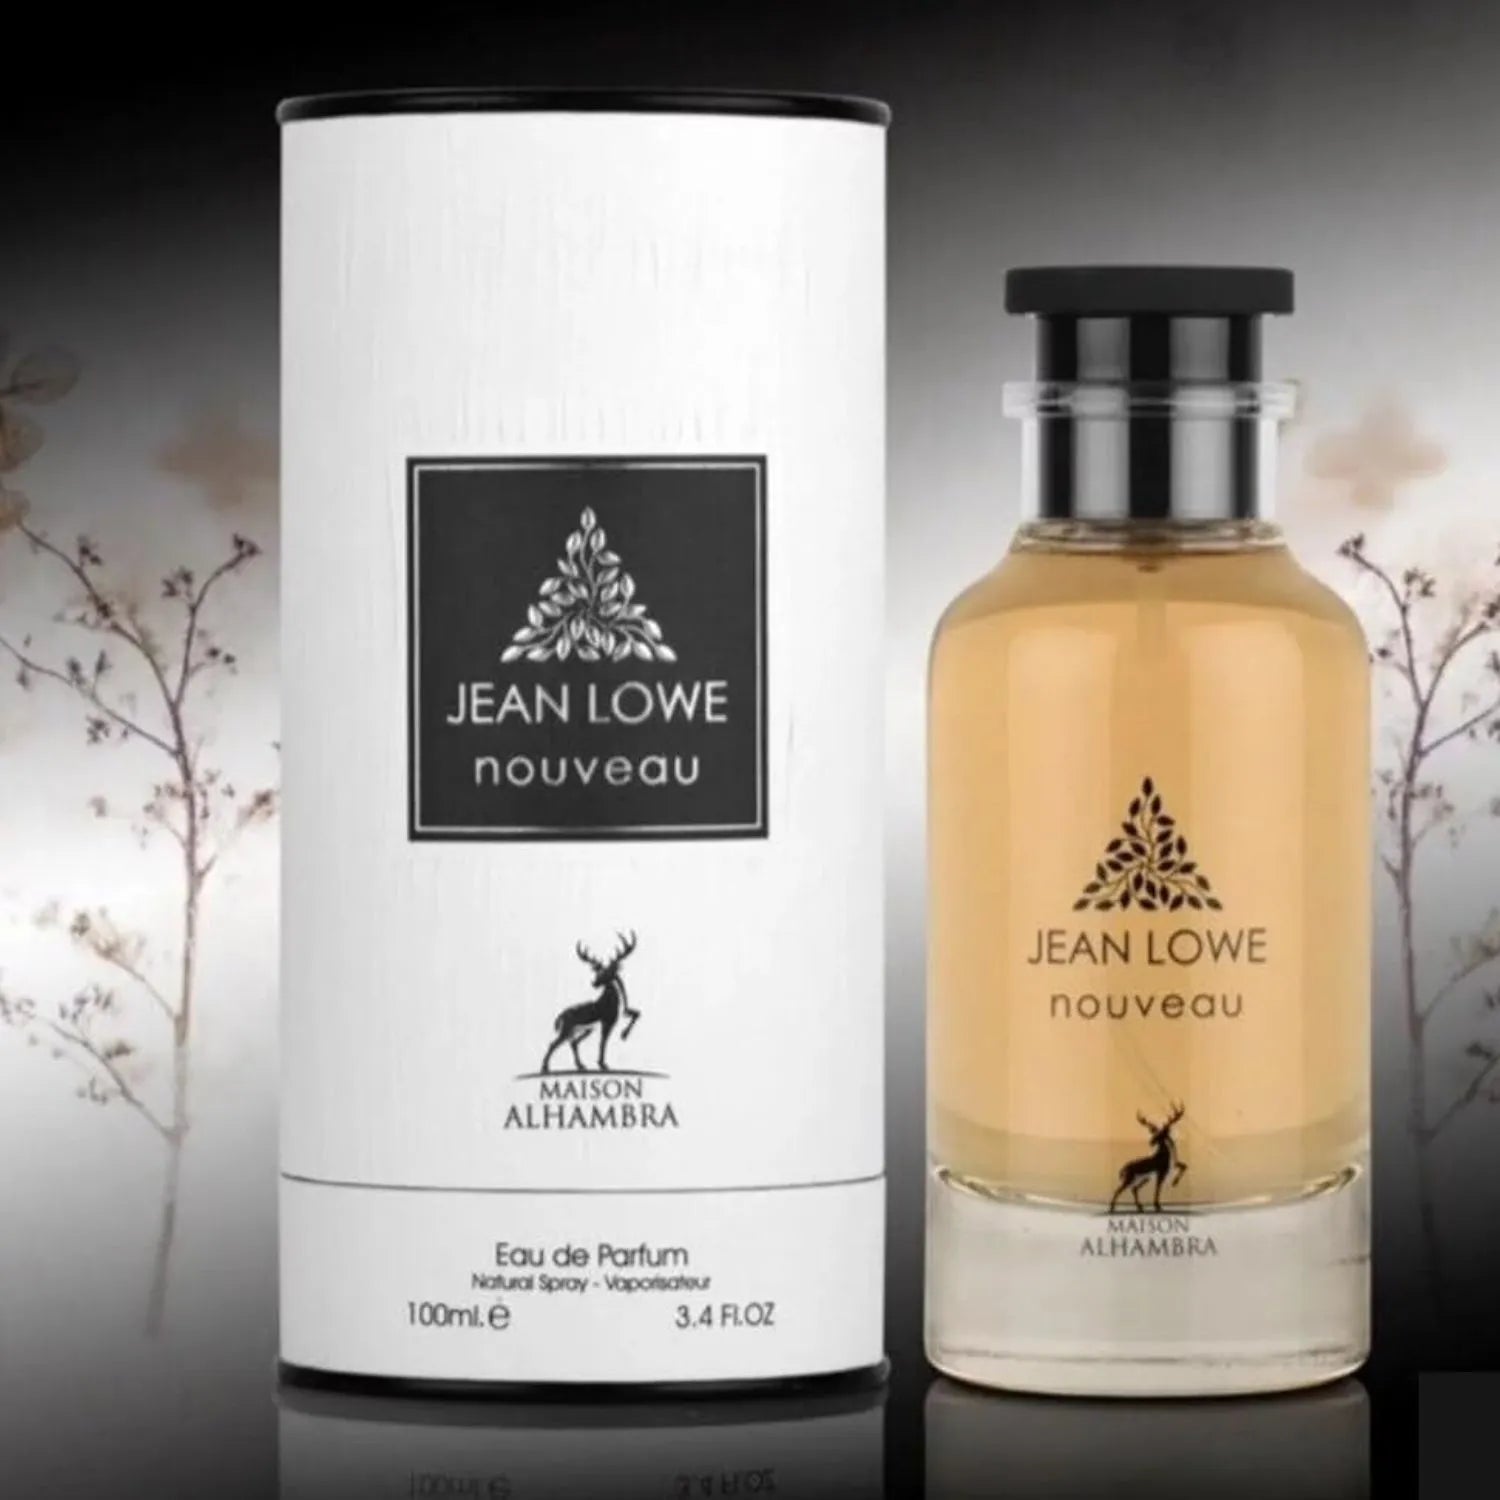 Jean Lowe Nouveau Perfume Image